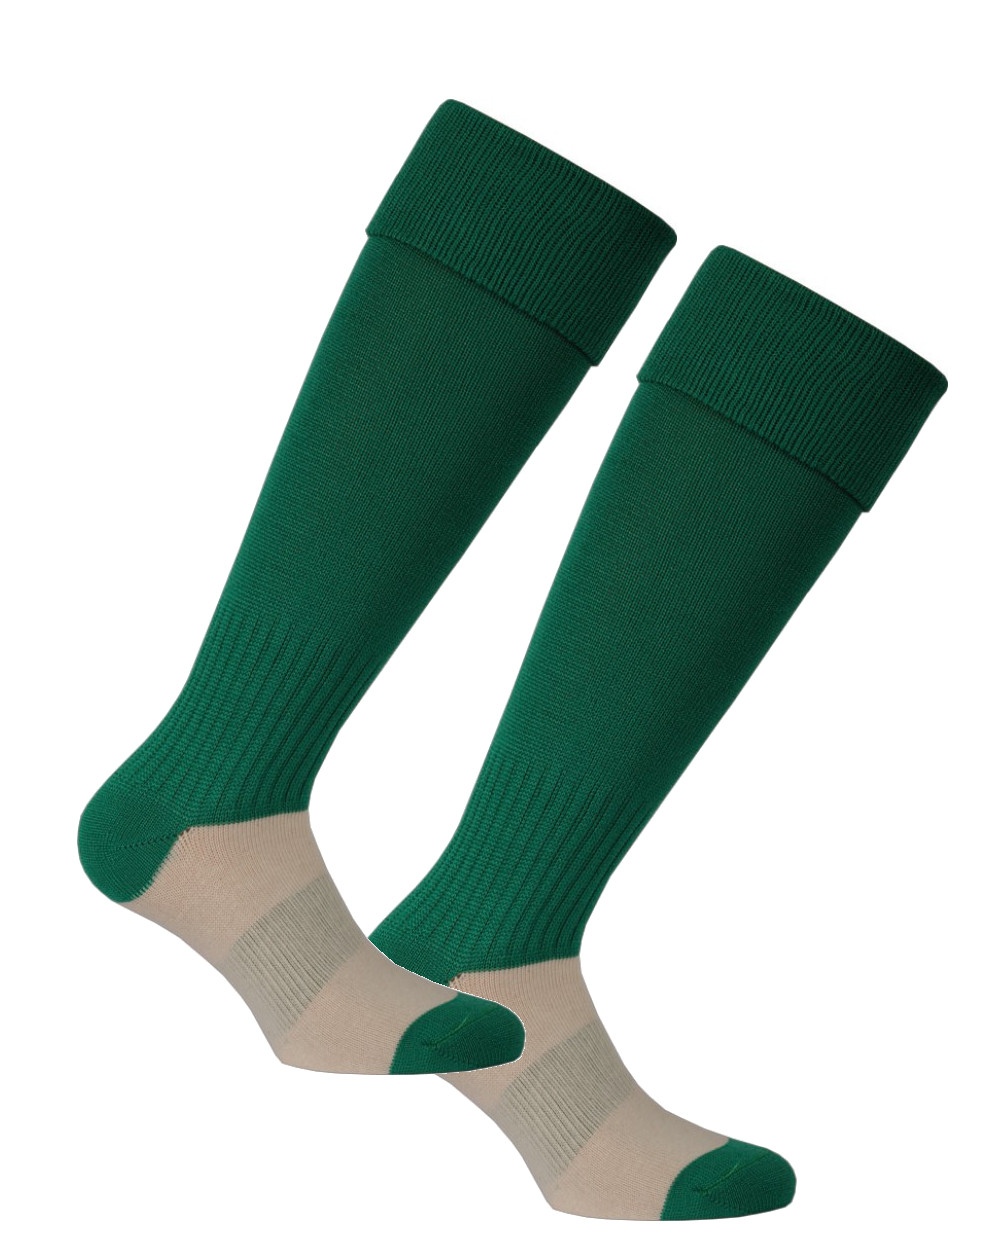  Pedaci Calzettoni Calcio Socks Unisex Verde polipropilene made in italy